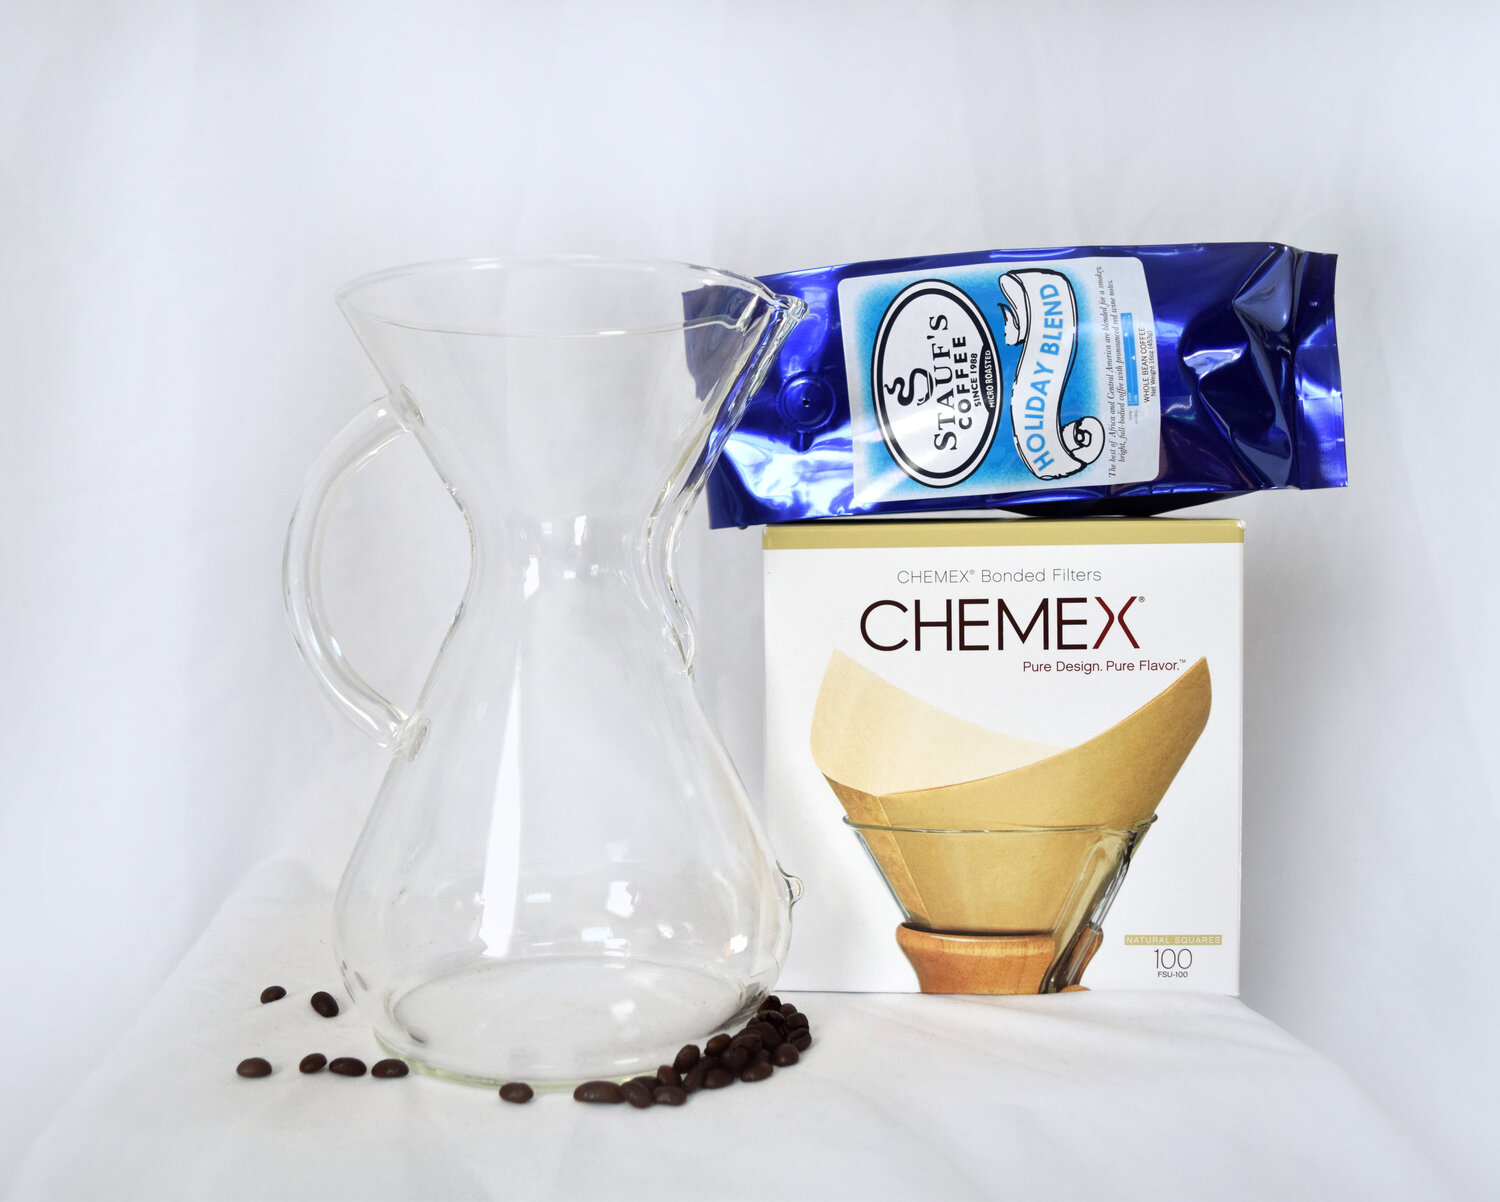 Chemex Gift Set — Bonlife Coffee